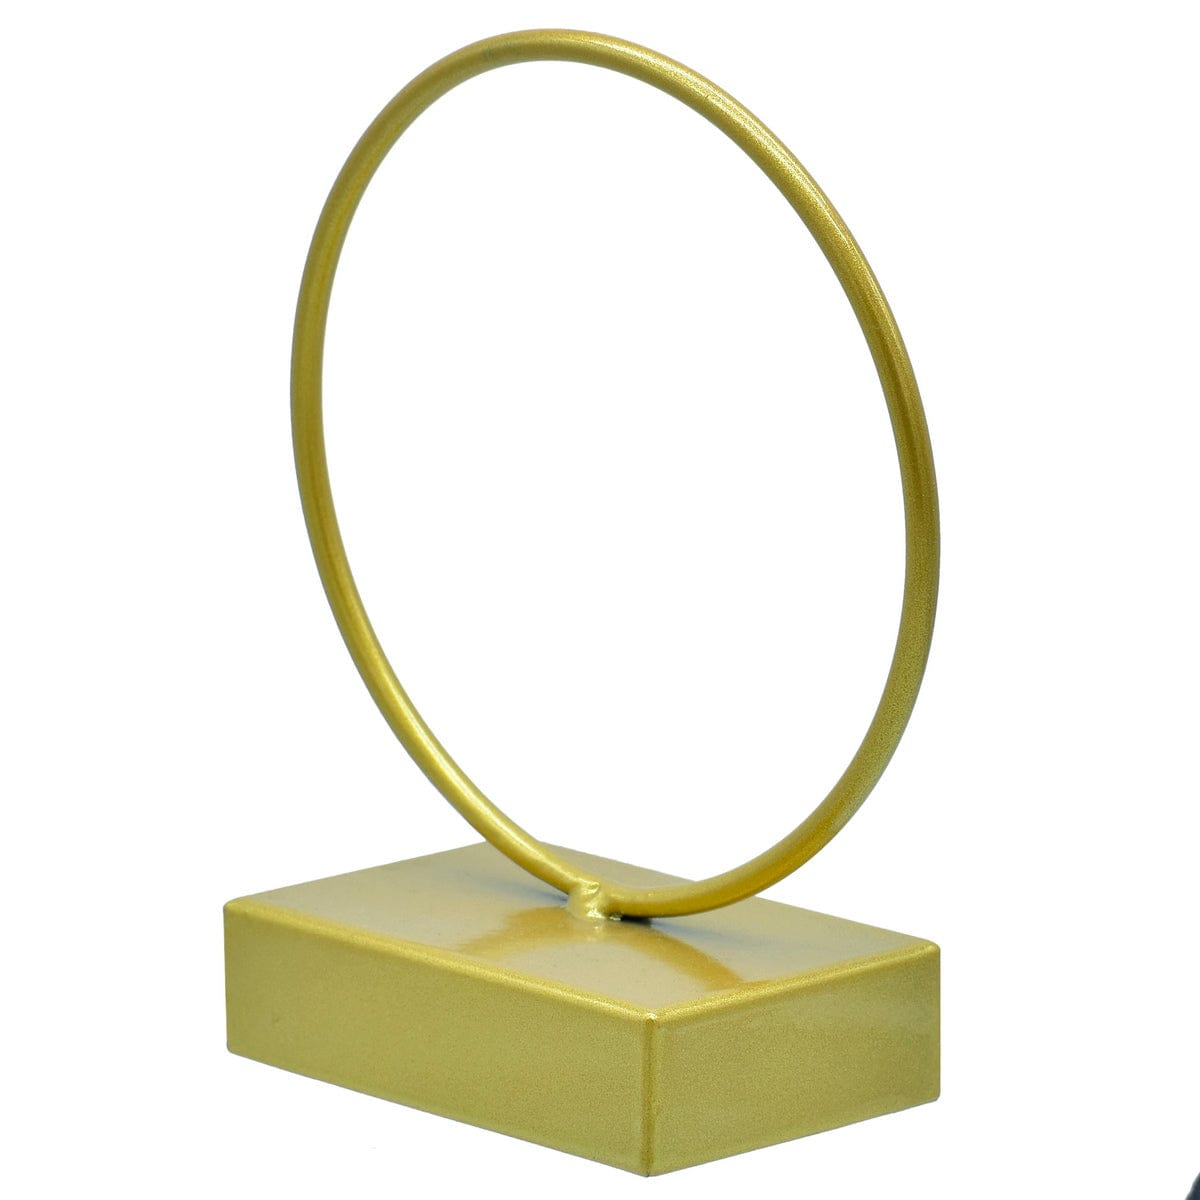 jags-mumbai Easel Elegant Gold Round Metal Stand - 6 Inch Diameter, Contain 1 Unit